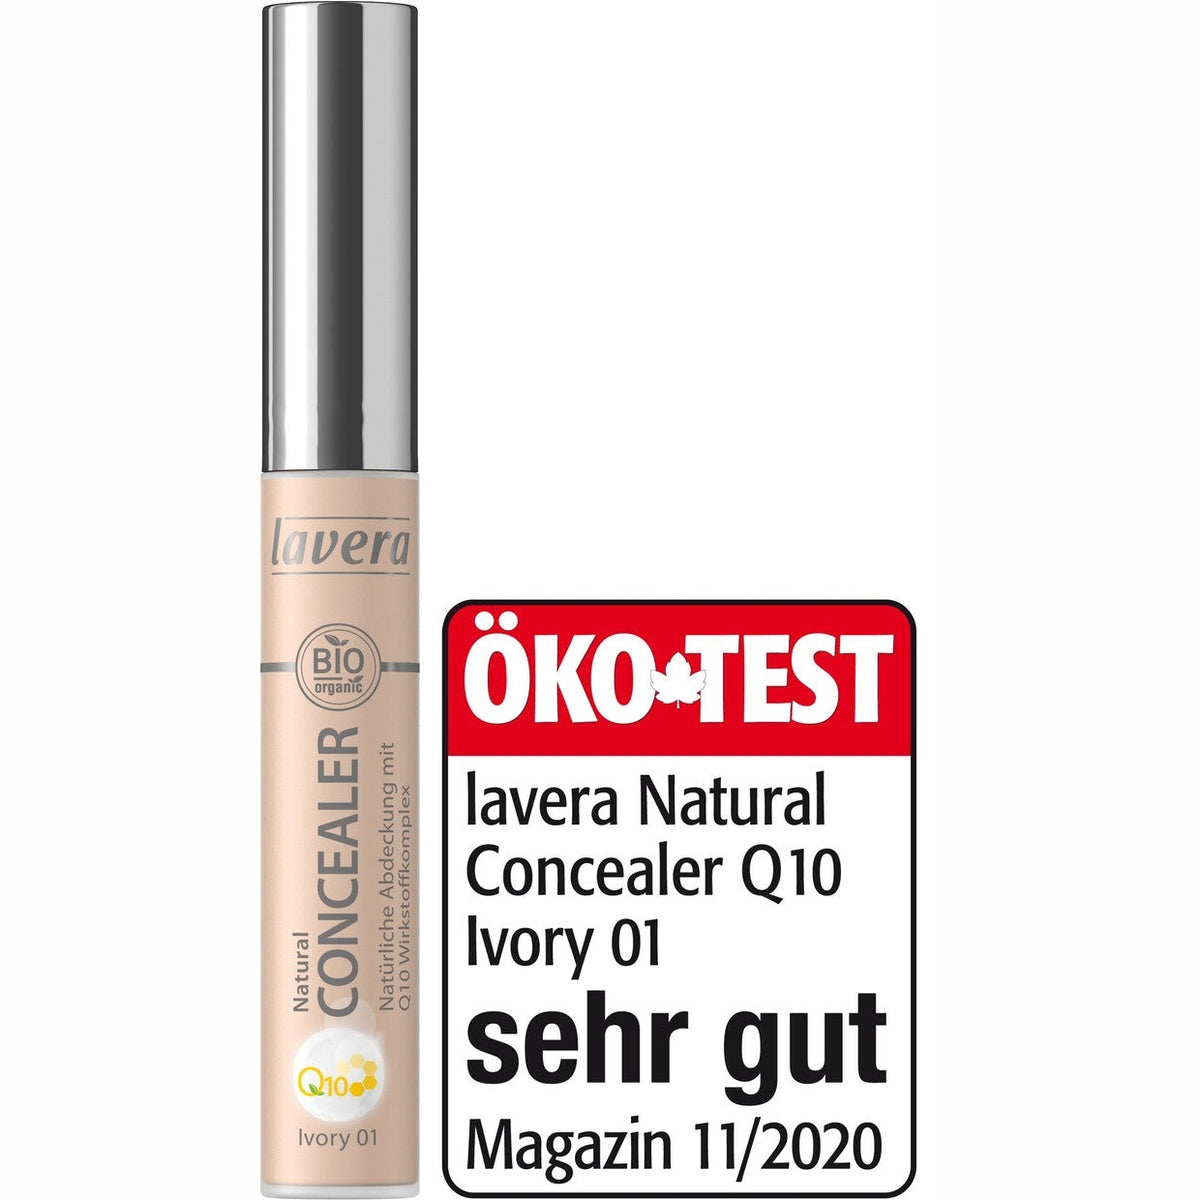 Lavera Natural Concealer - 01 Makeup Organic - Ivory firstorganicbaby – Q10